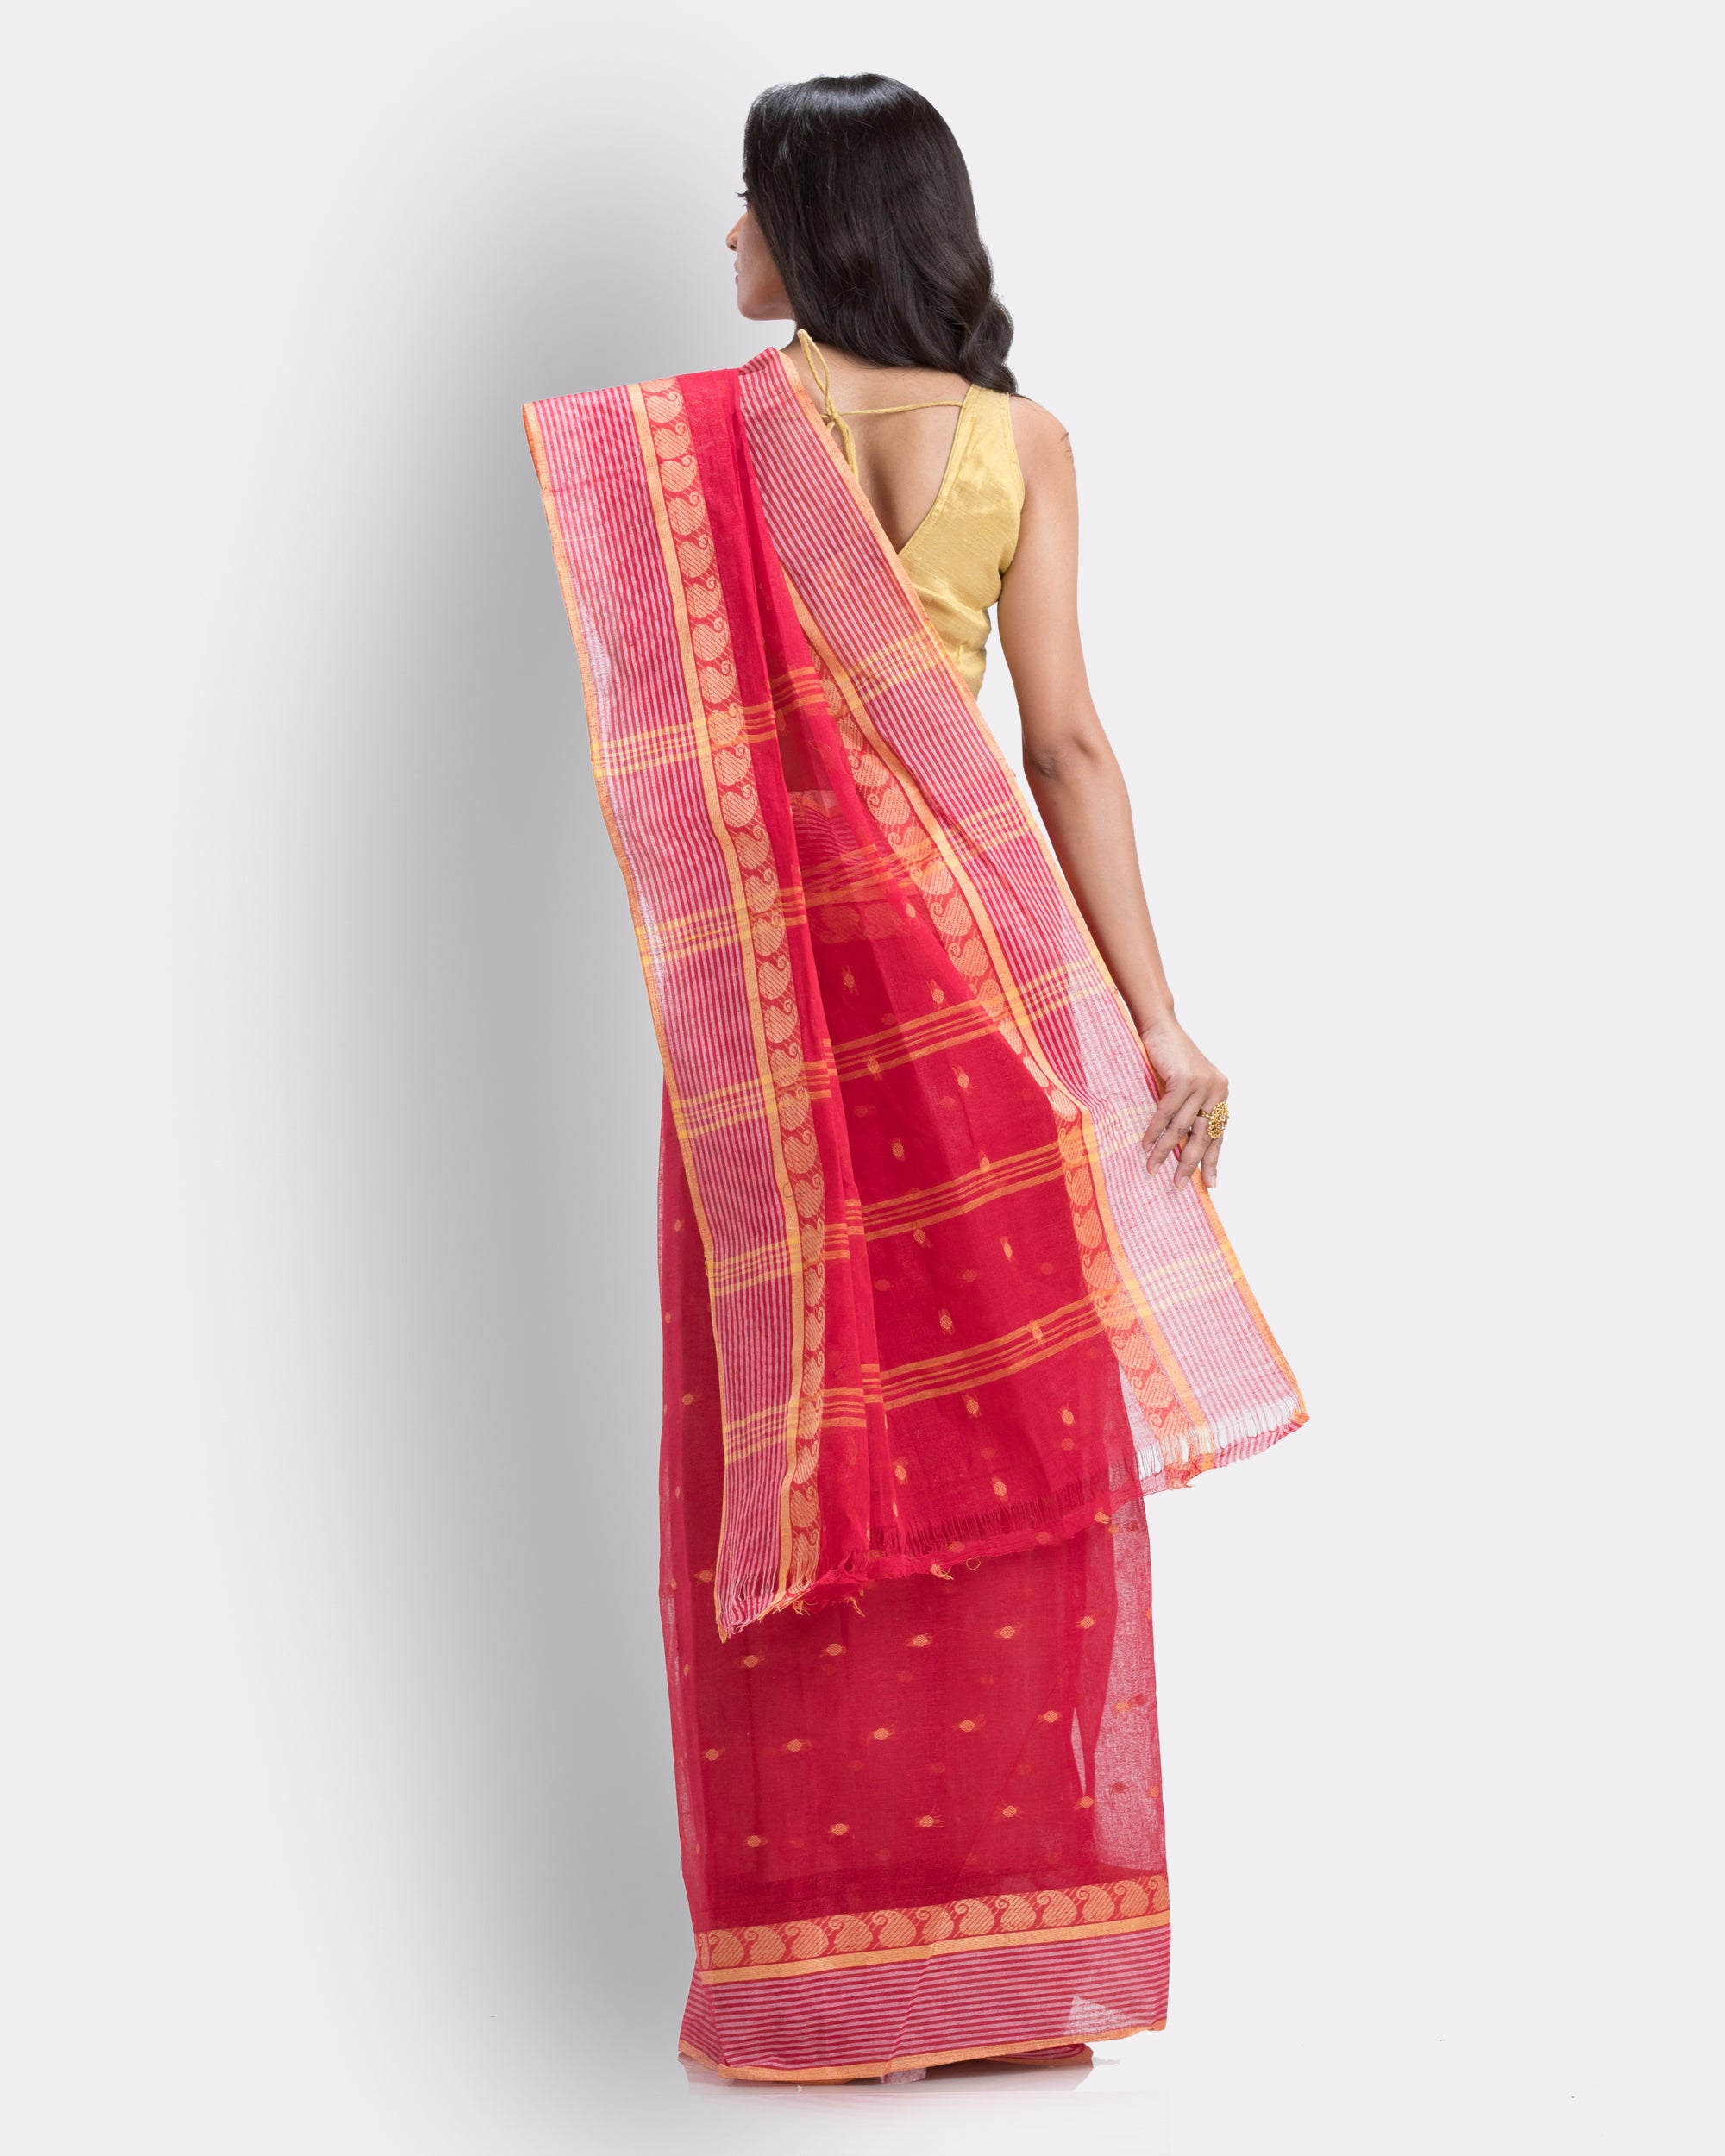 Women's Self Design Tant Pure Cotton Saree (Red) - Angoshobha